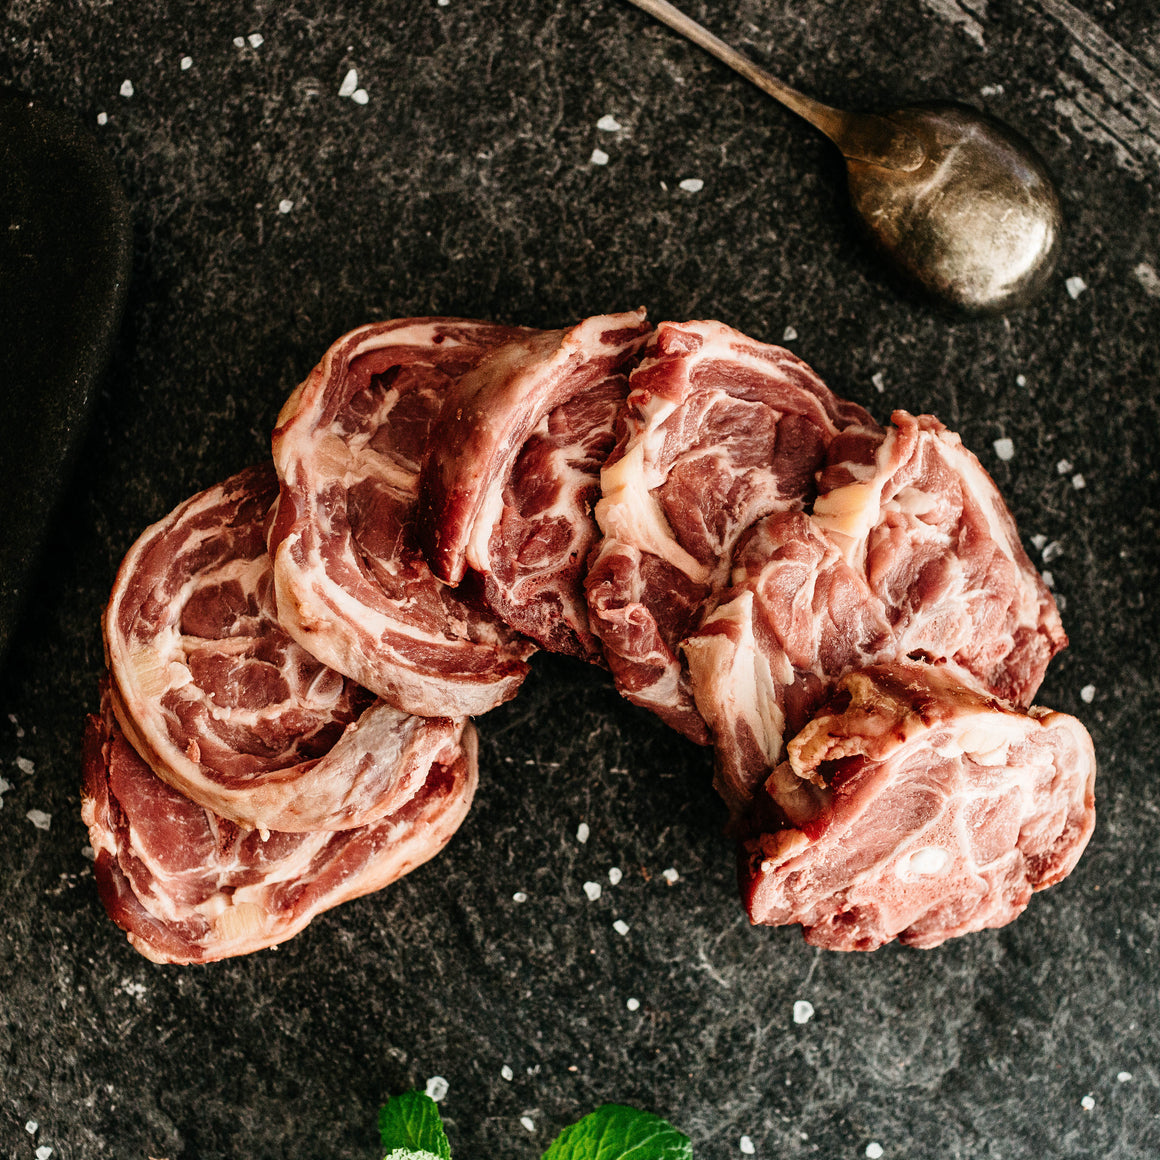 Moreish online organic butchery organic nz lamb neck chops 